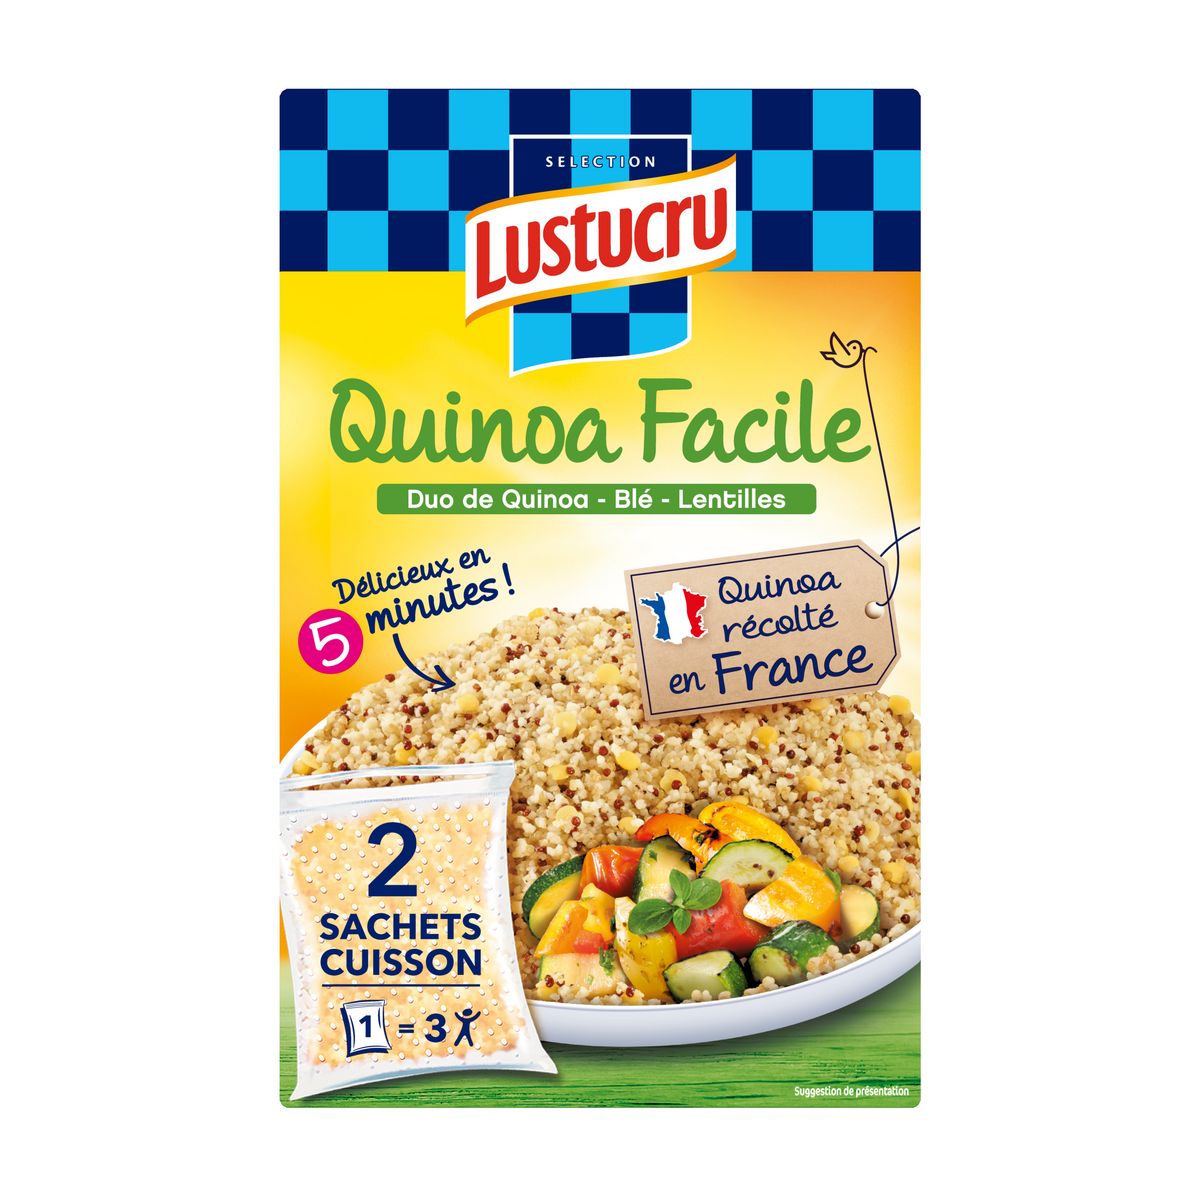 LUSTUCRU Quinoa facile blé lentilles en sachets 2 sachets 300g